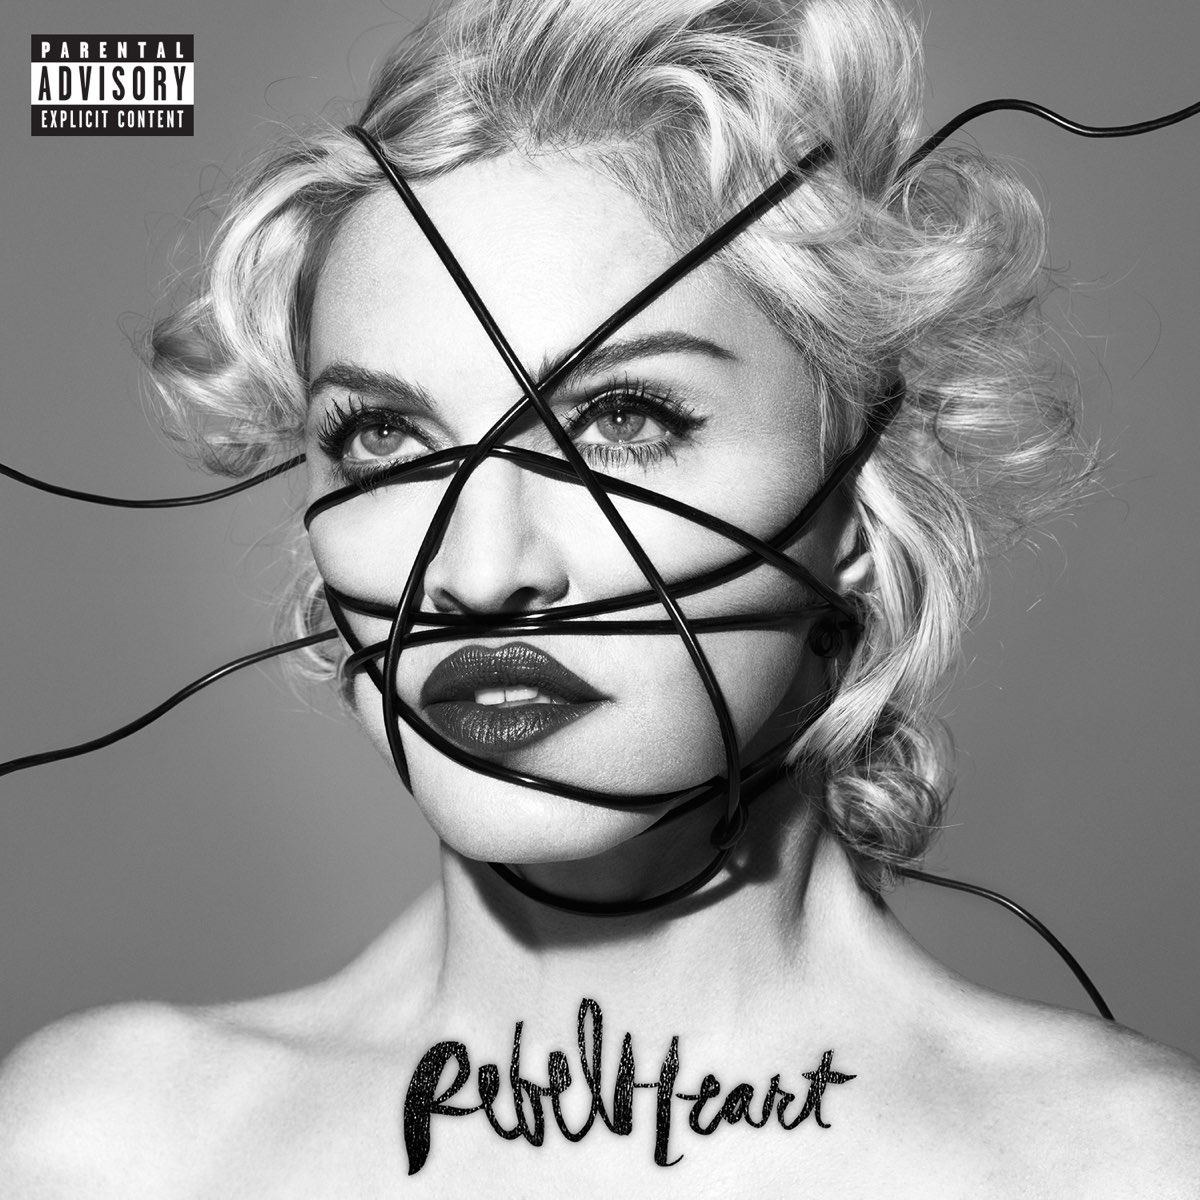 ‎Rebel Heart - Album by Madonna - Apple Music